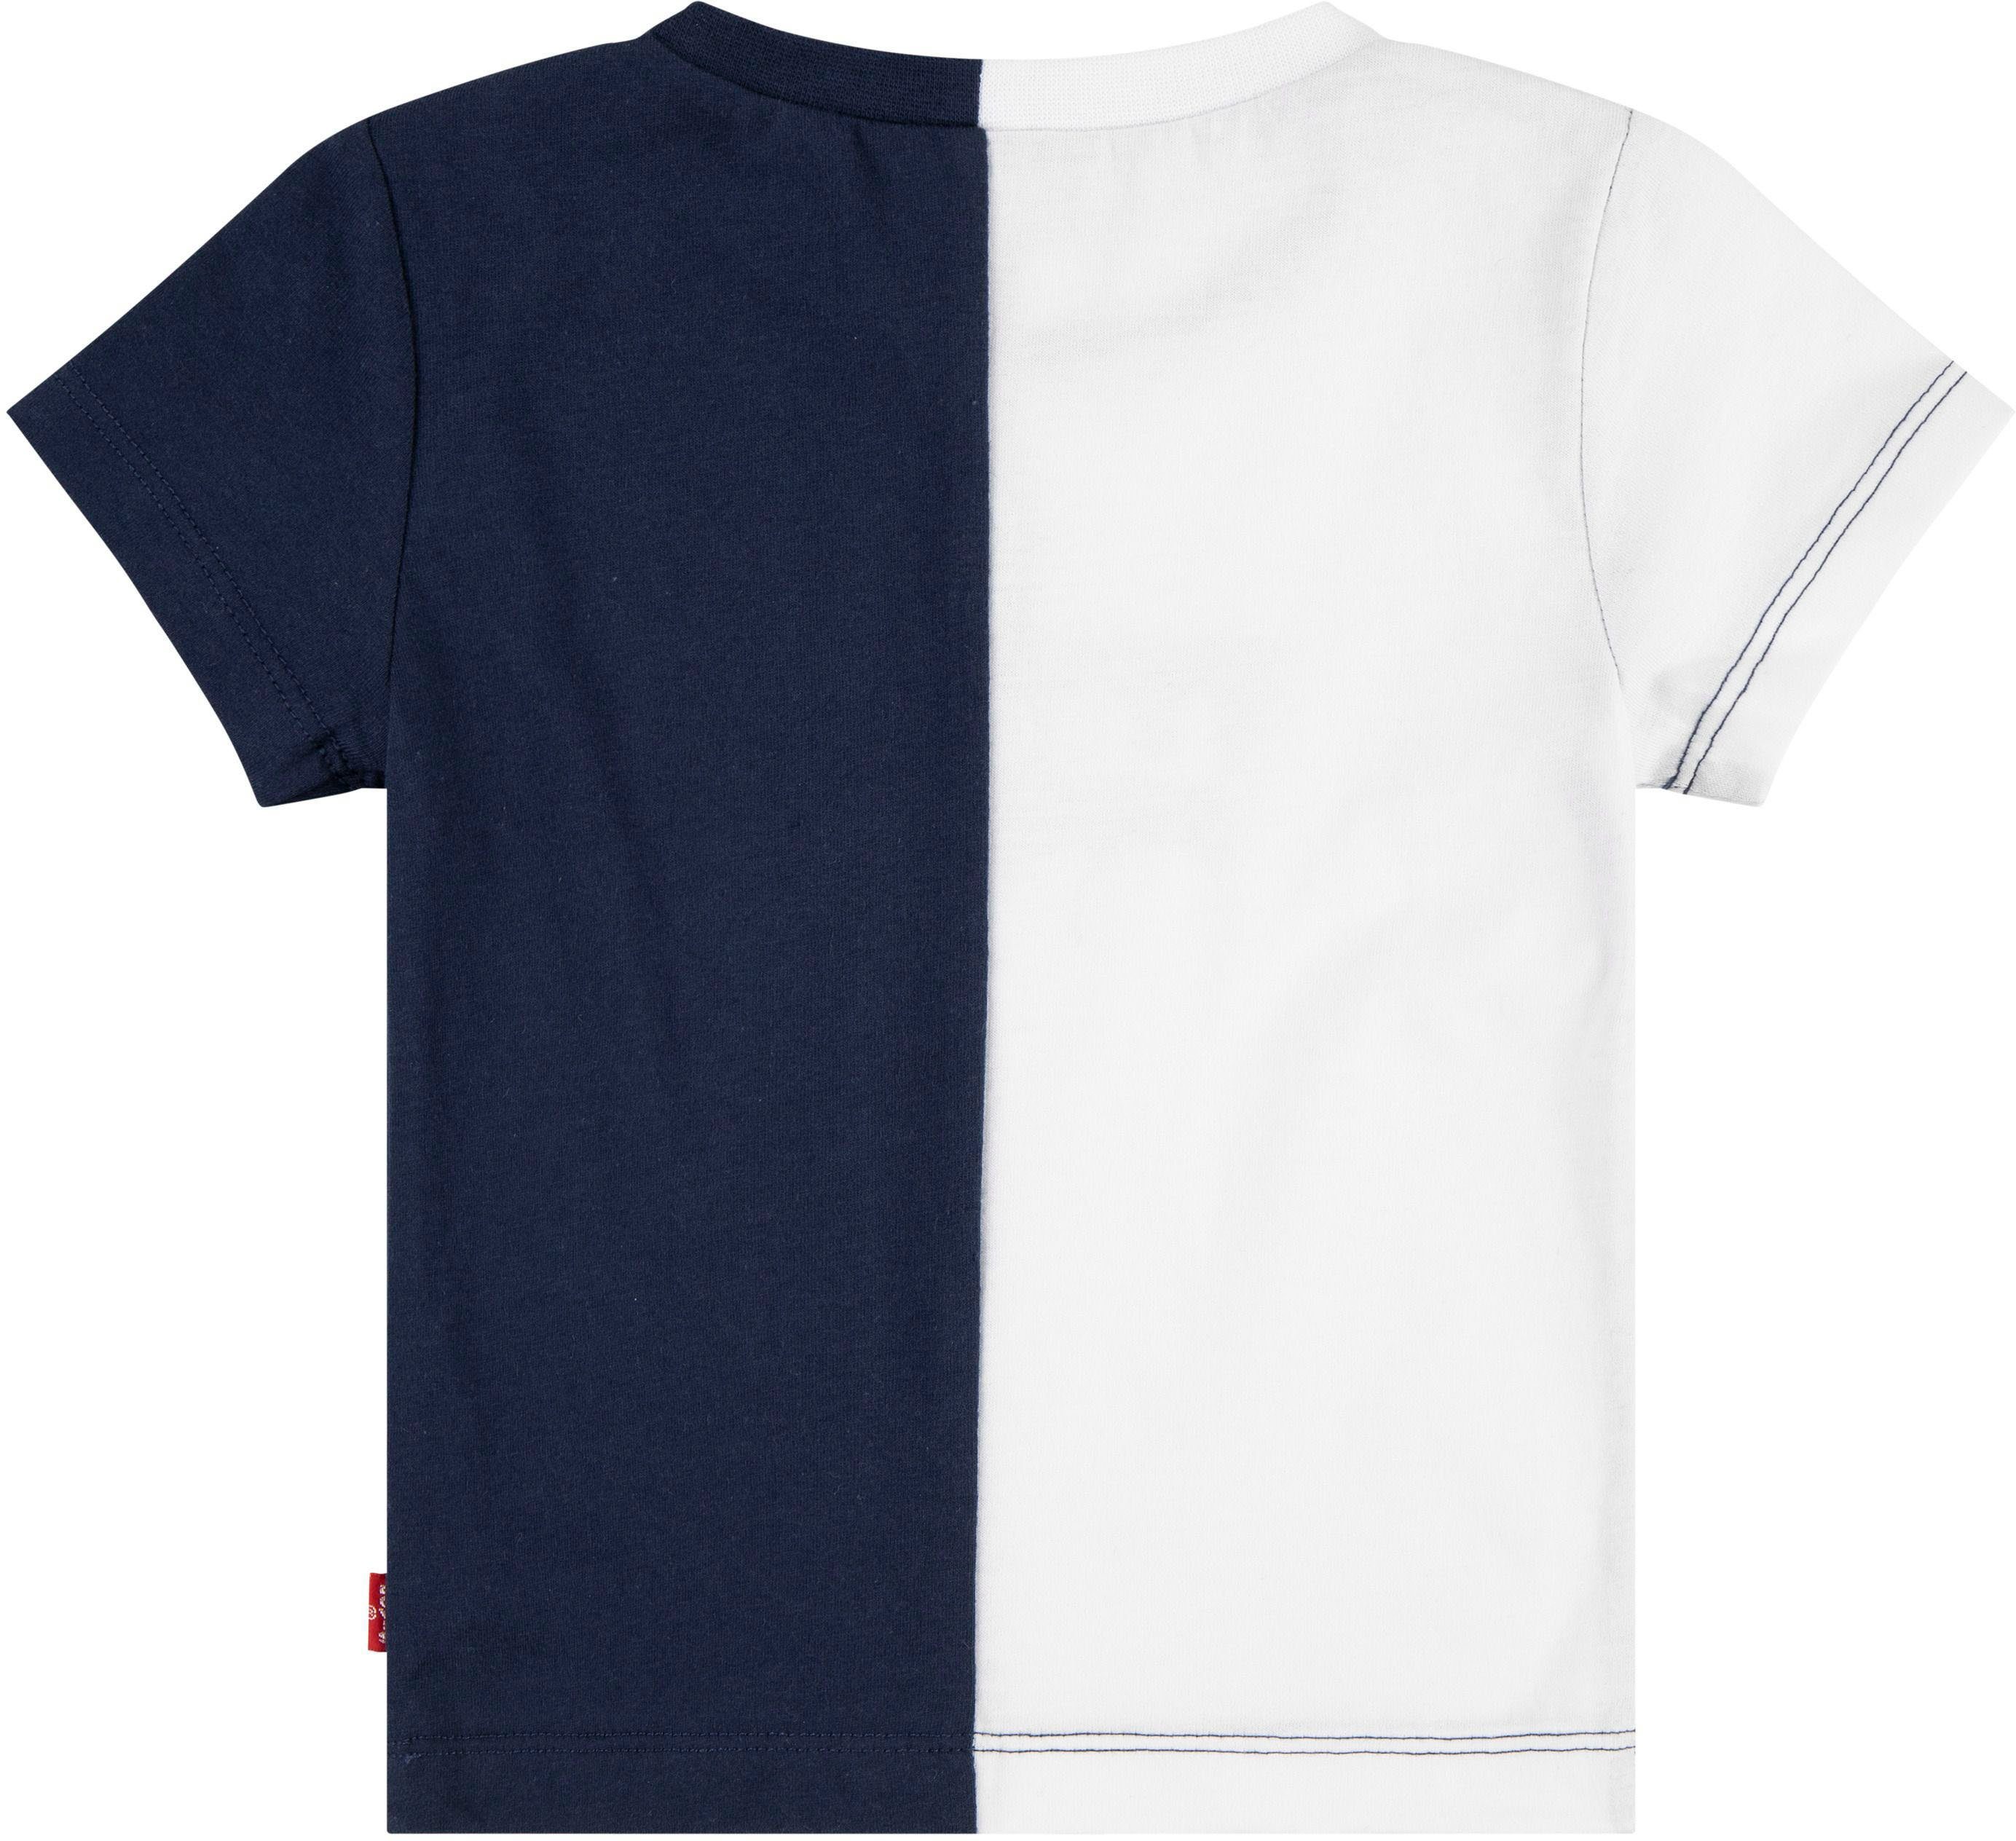 Kids SS BOYS Print-Shirt SPLICED Levi's® TEE GRAPHIC for Baby LVB